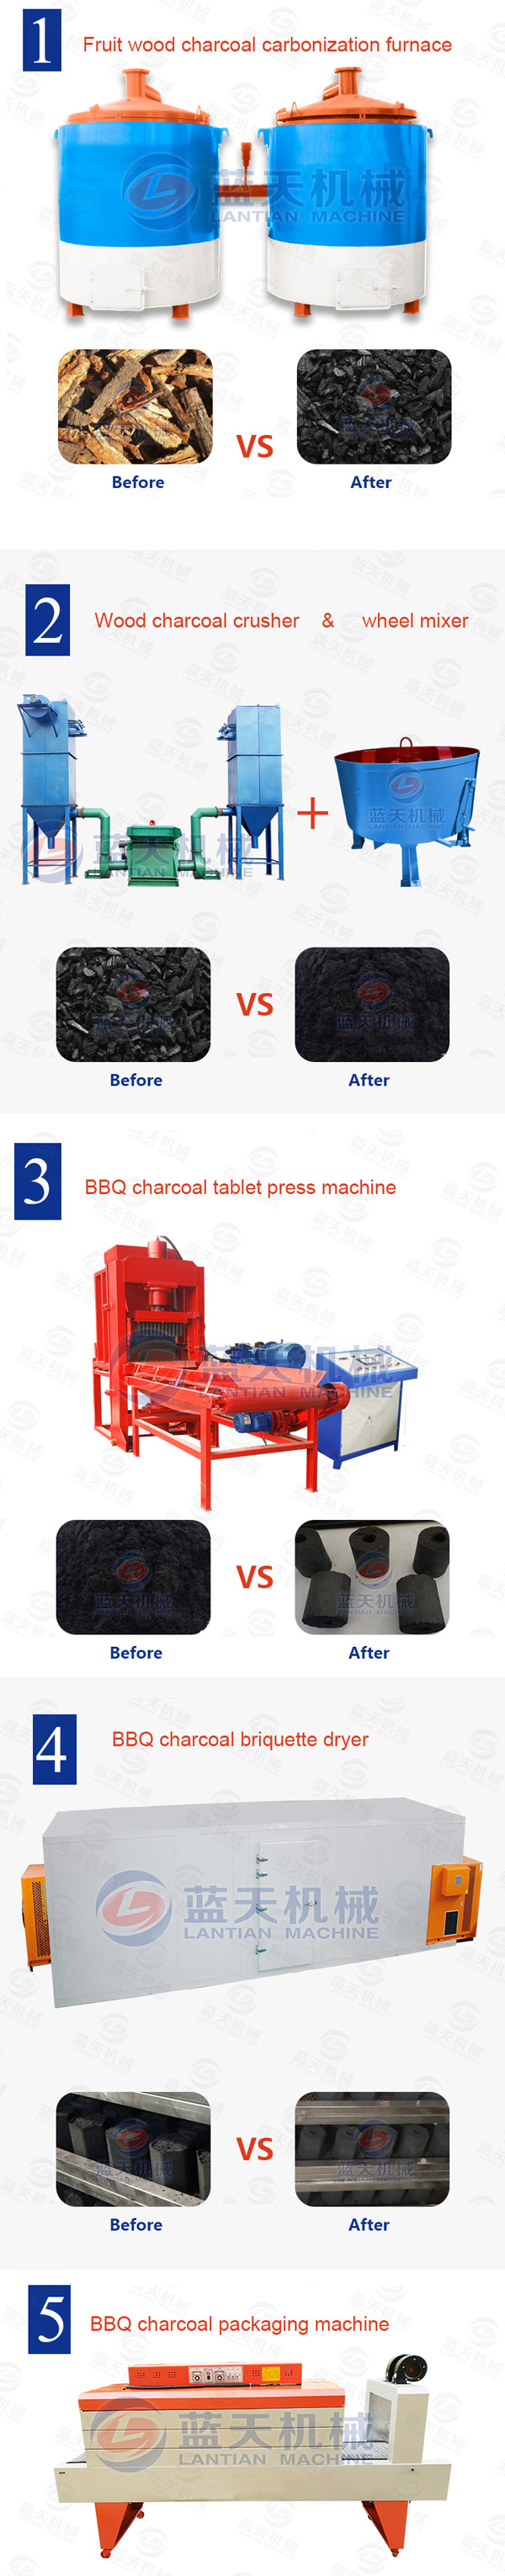 BBQ charcoal pressing machine